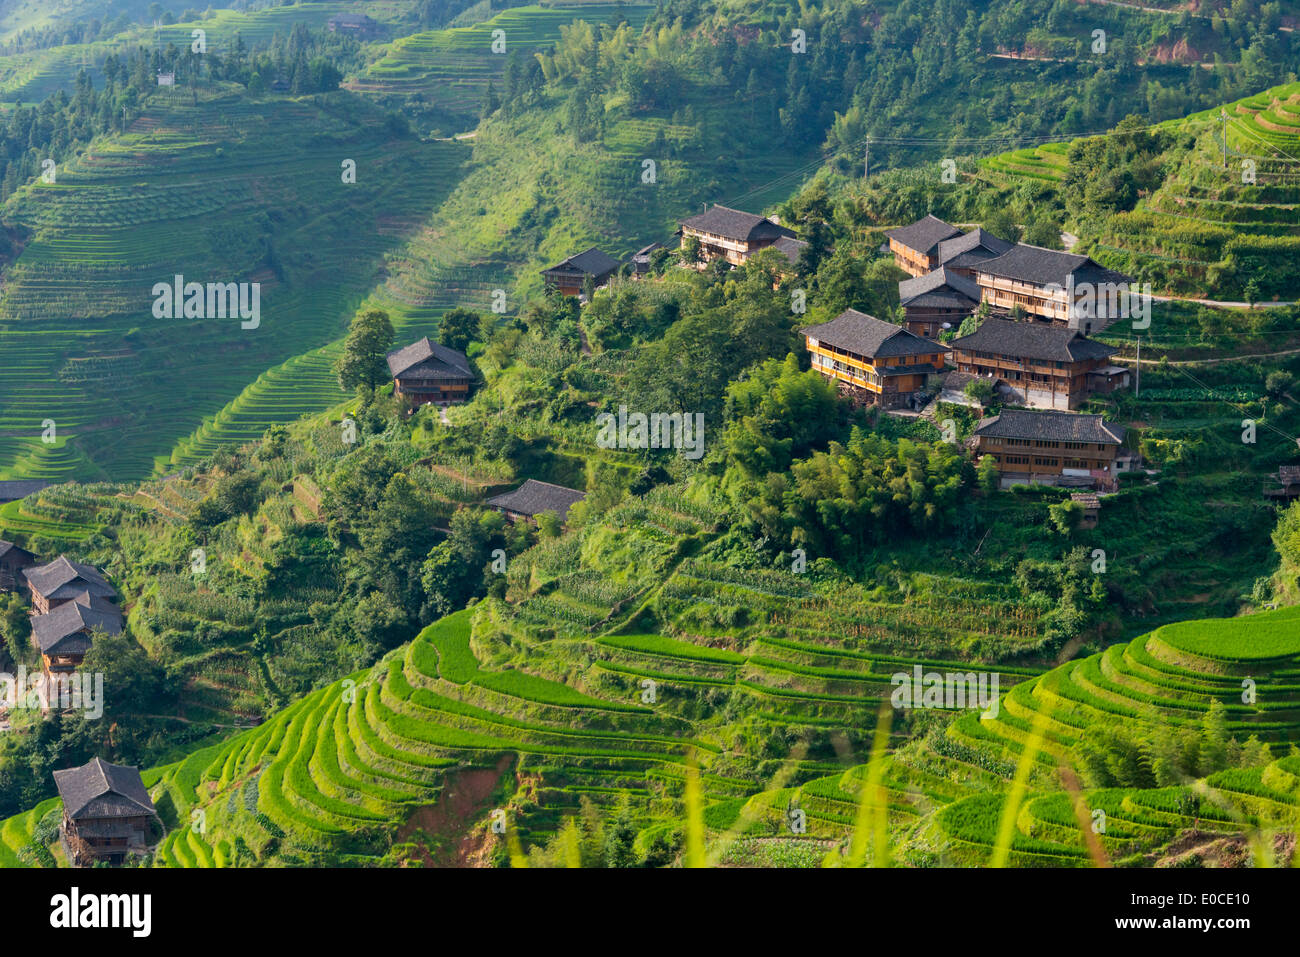 Casa in paese e terrazze di riso in montagna, Longsheng, provincia di Guangxi, Cina Foto Stock